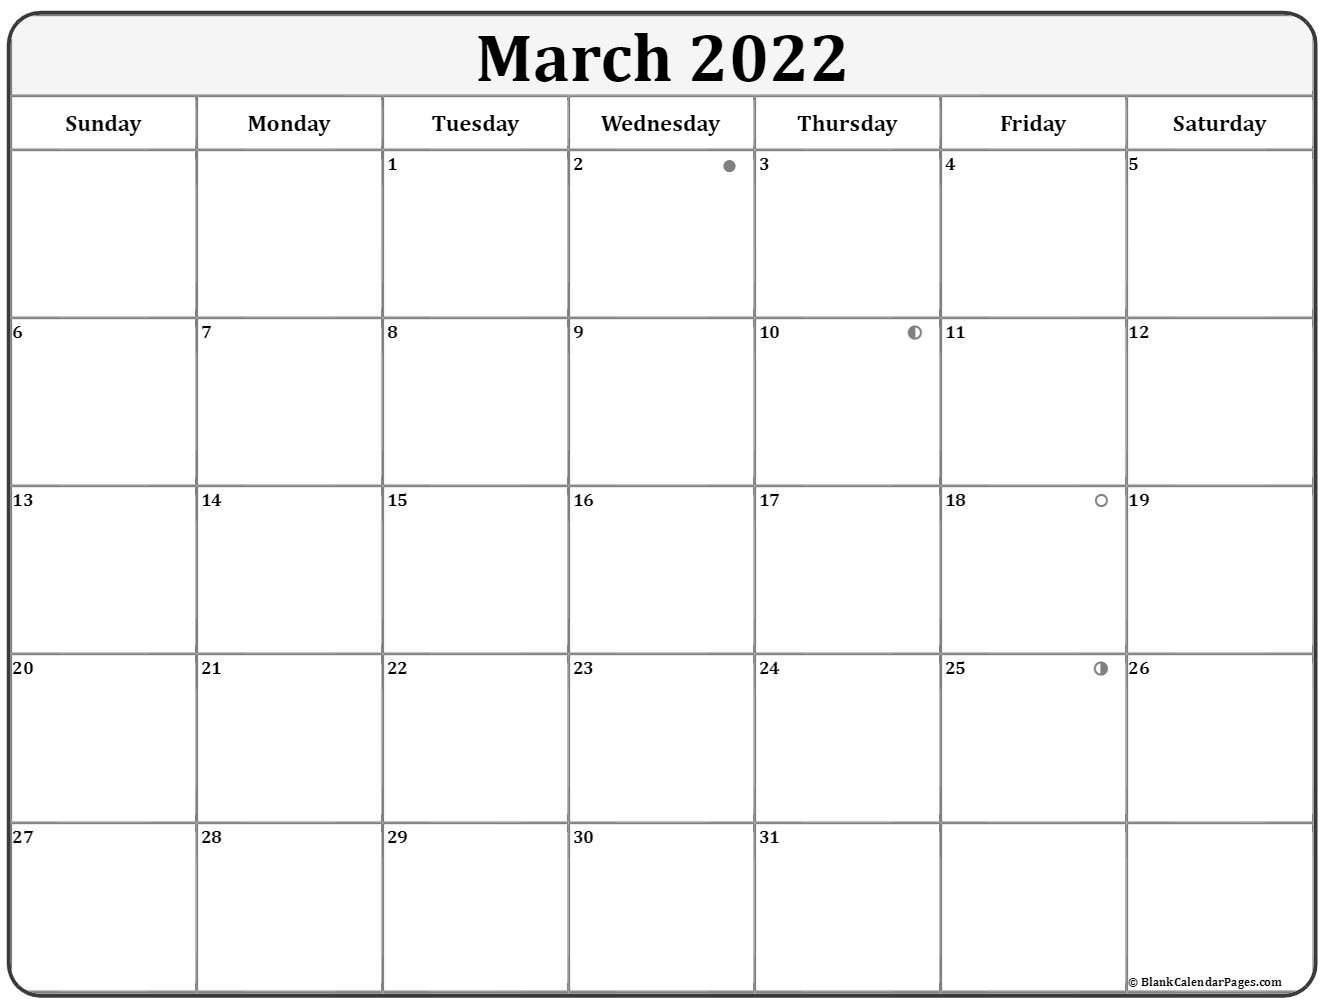 March 2022 Lunar Calendar | Moon Phase Calendar  Full Moon Calendar 2022 Free Printable